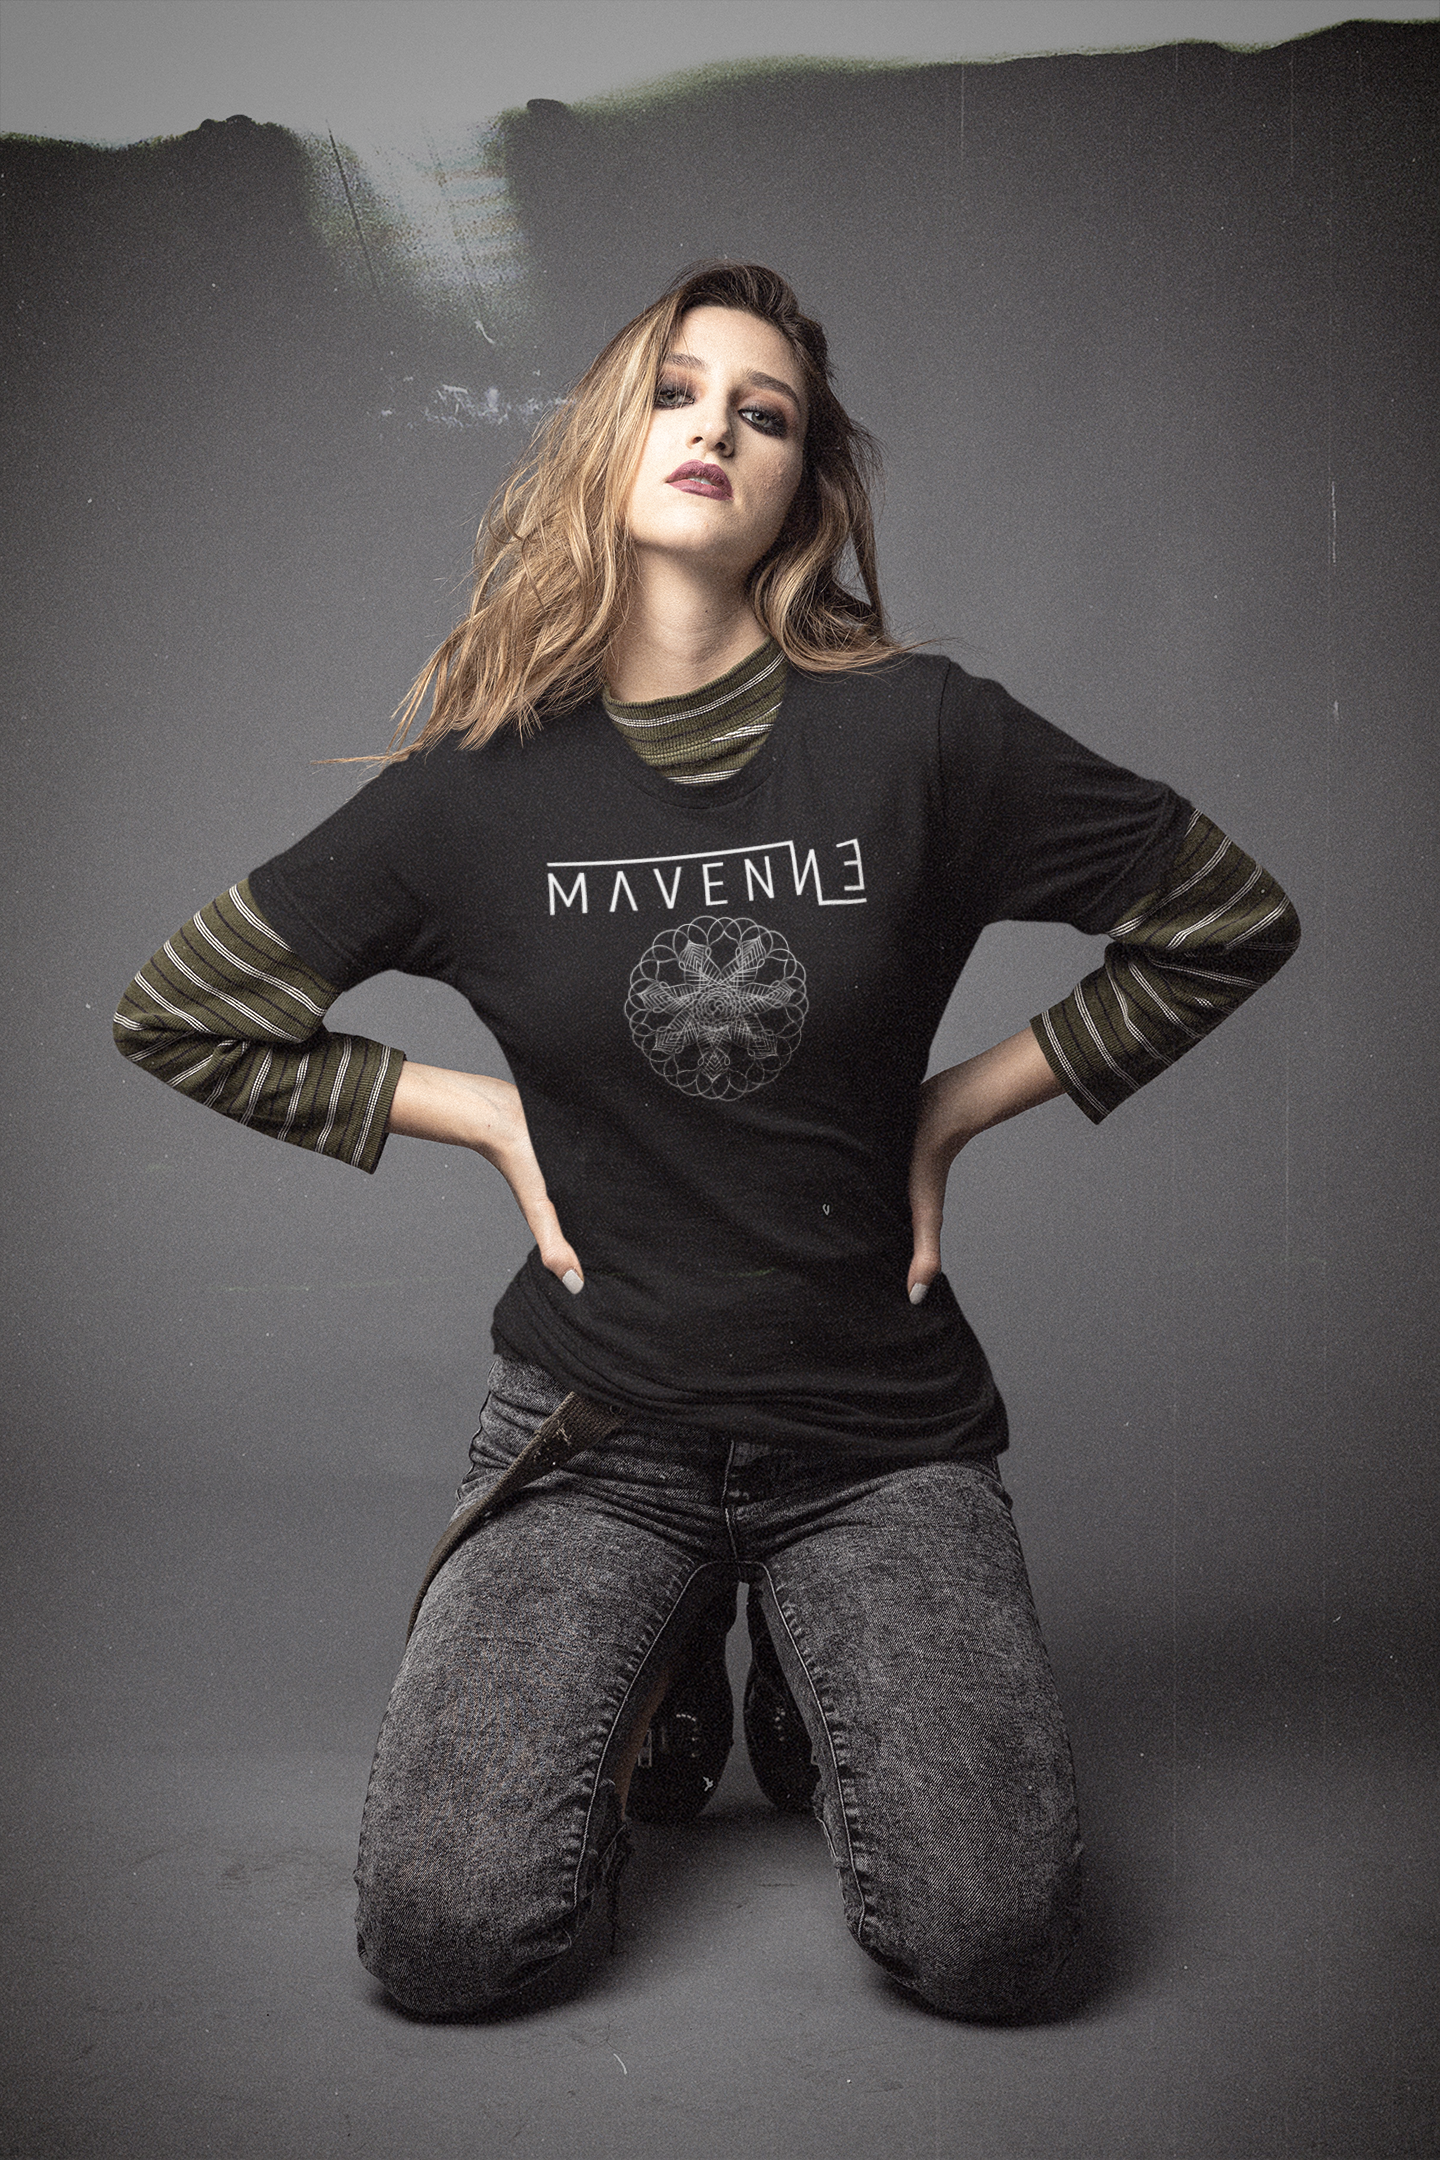 Short-Sleeve Unisex T-Shirt with Mavenne's Hand-designed Artwork